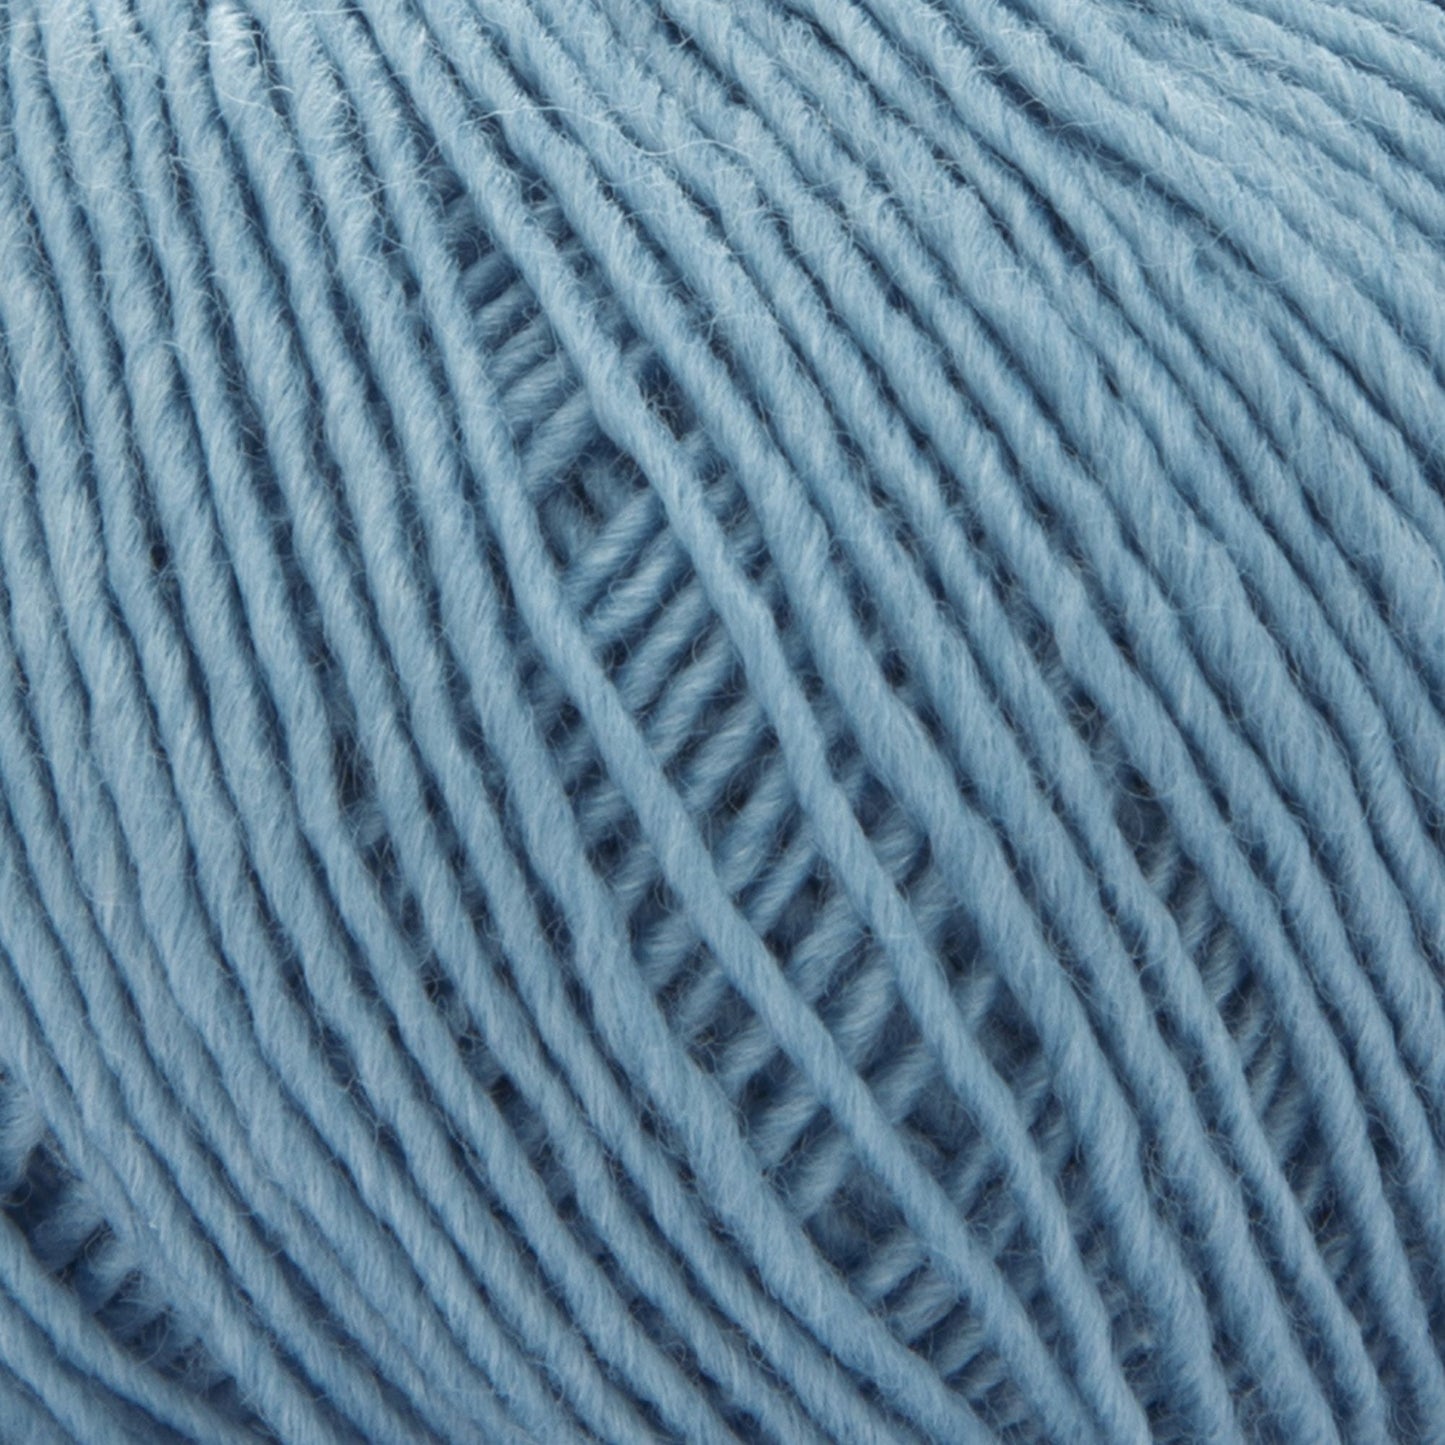 GGH Lacy | Merinowolle mit Seide | 25g - 170m | 004 - Eisblau